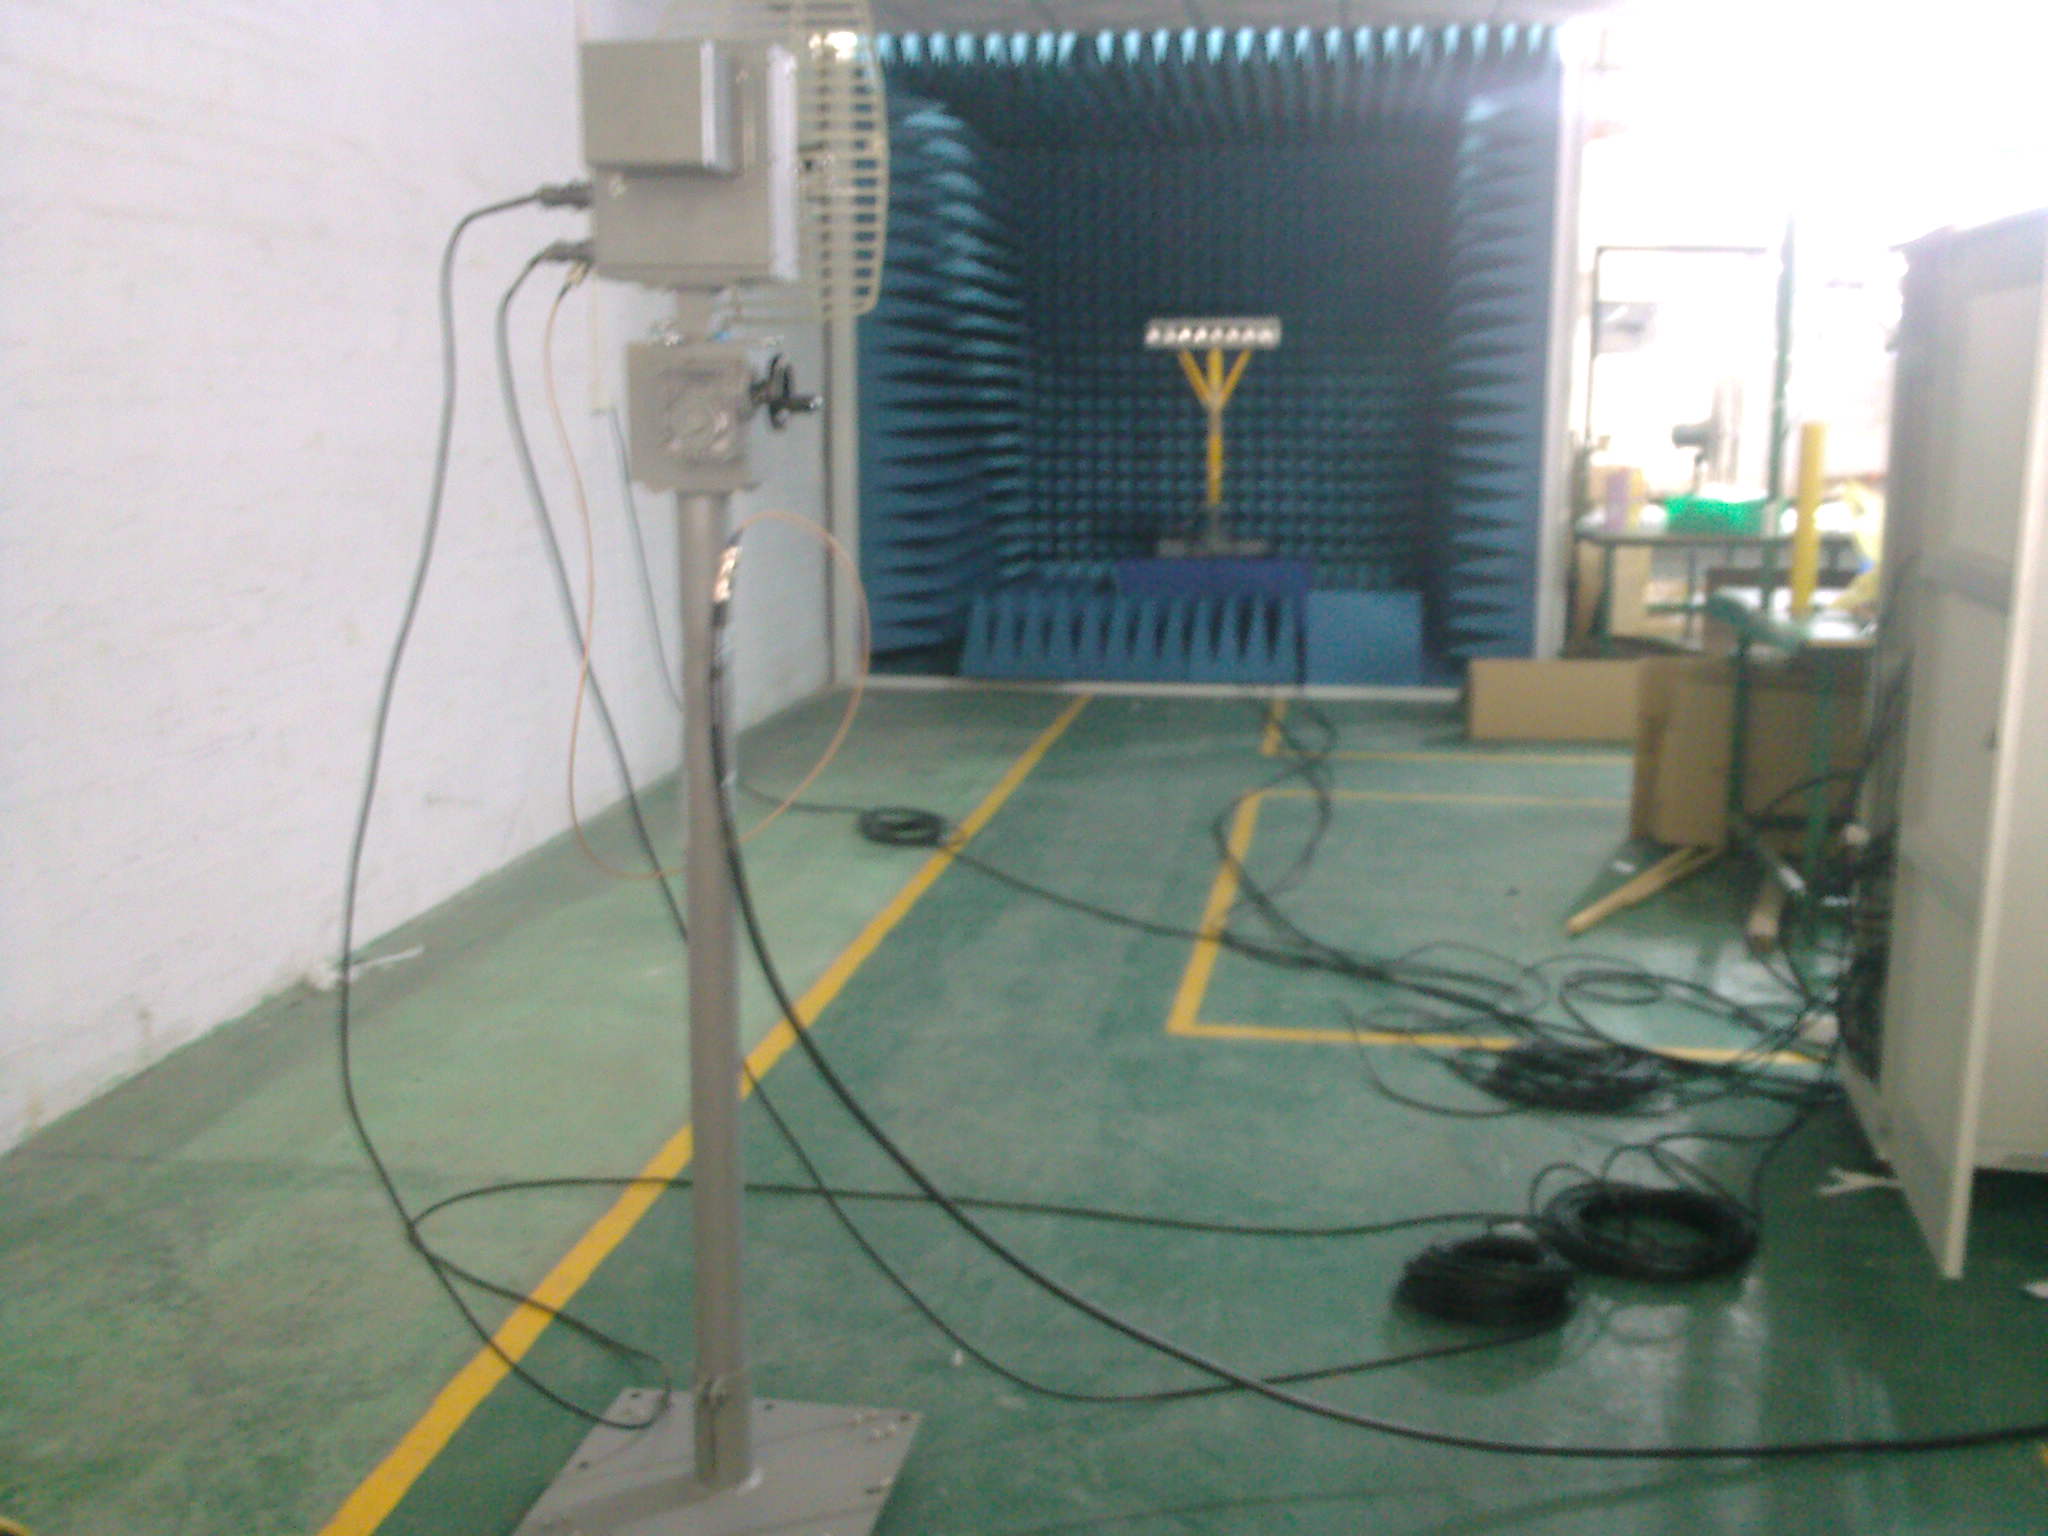 antenna test environment